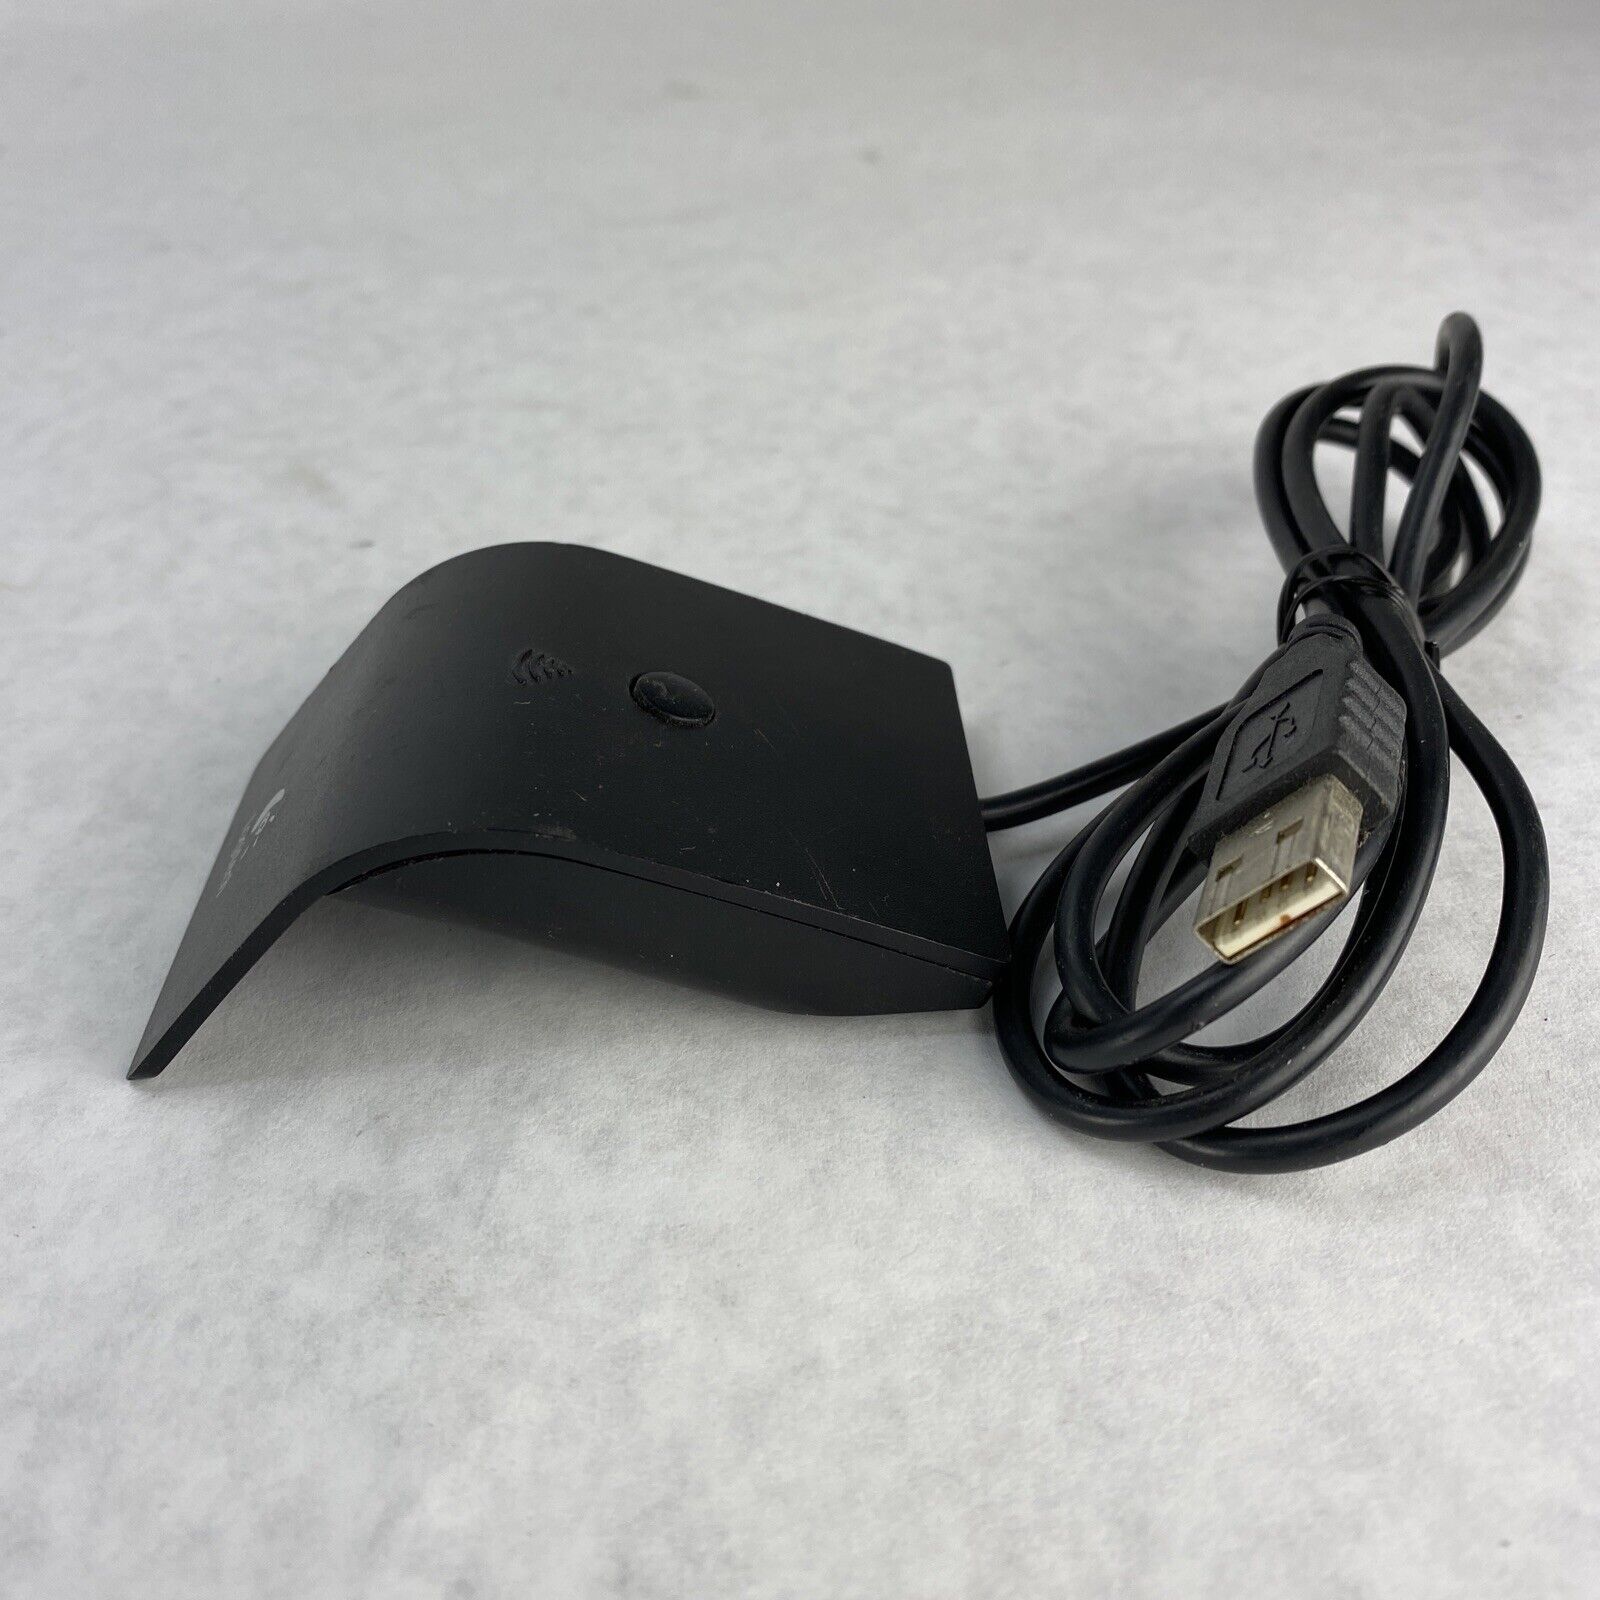 Logitech 831675-0000 C-BT44 USB Wireless Keyboard Mouse Receiver